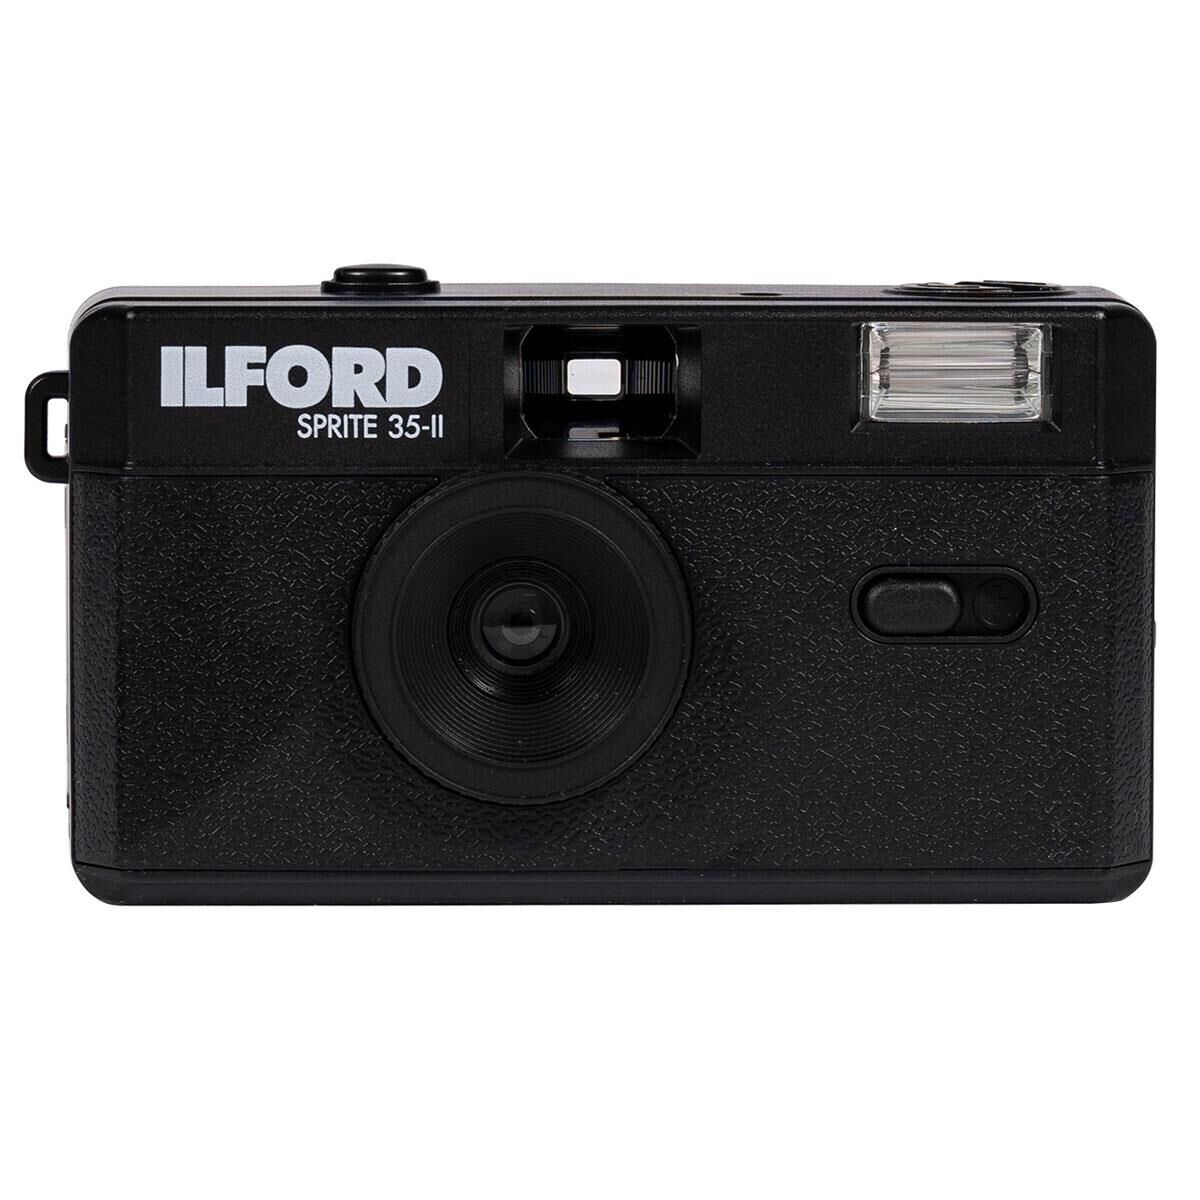 Ilford Sprite 35-II 35mm Reusable Film Camera, Black